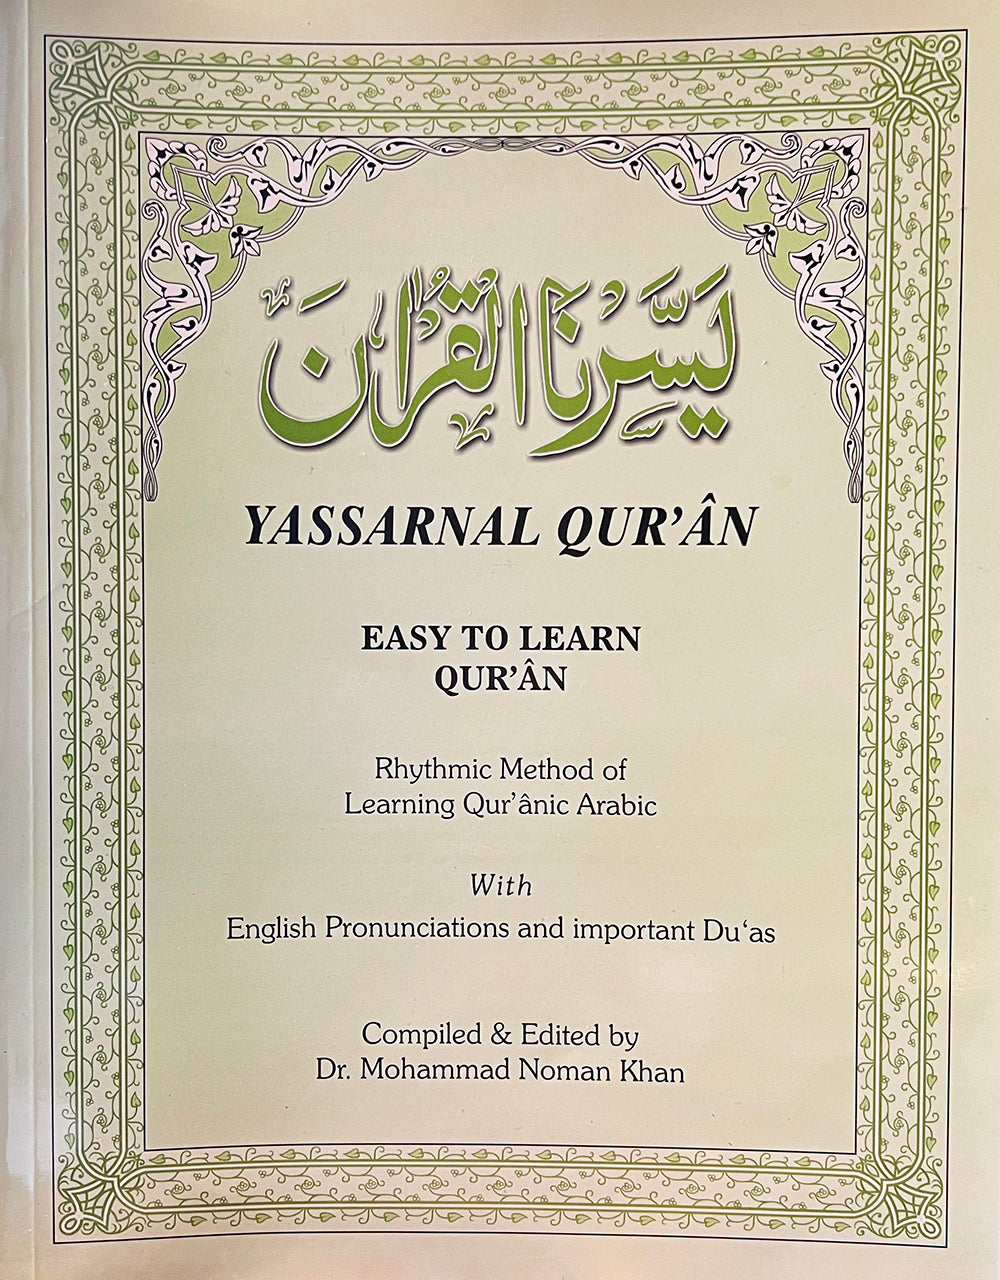 Yassarnal Quran, Easy to Learn Quran